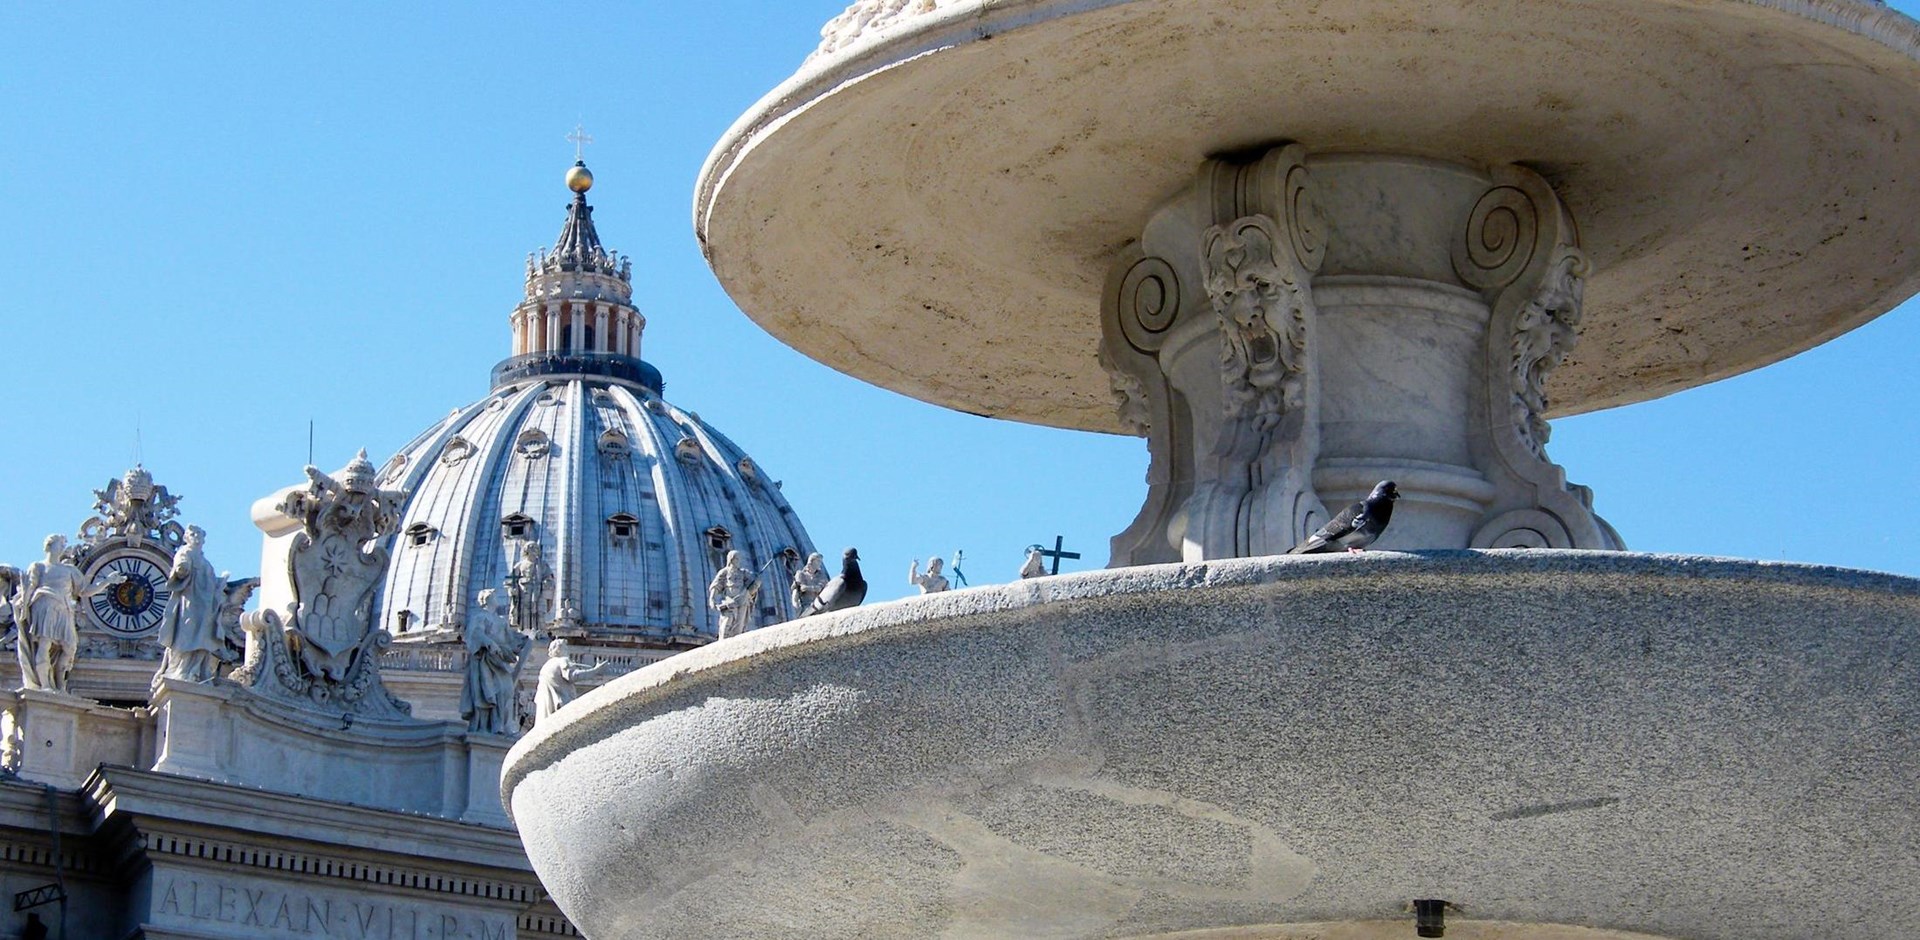 000940_St Peter's Basilica_Vatican City_Rome_Italy_Mick Barnard_no model release signed_004-Hybris